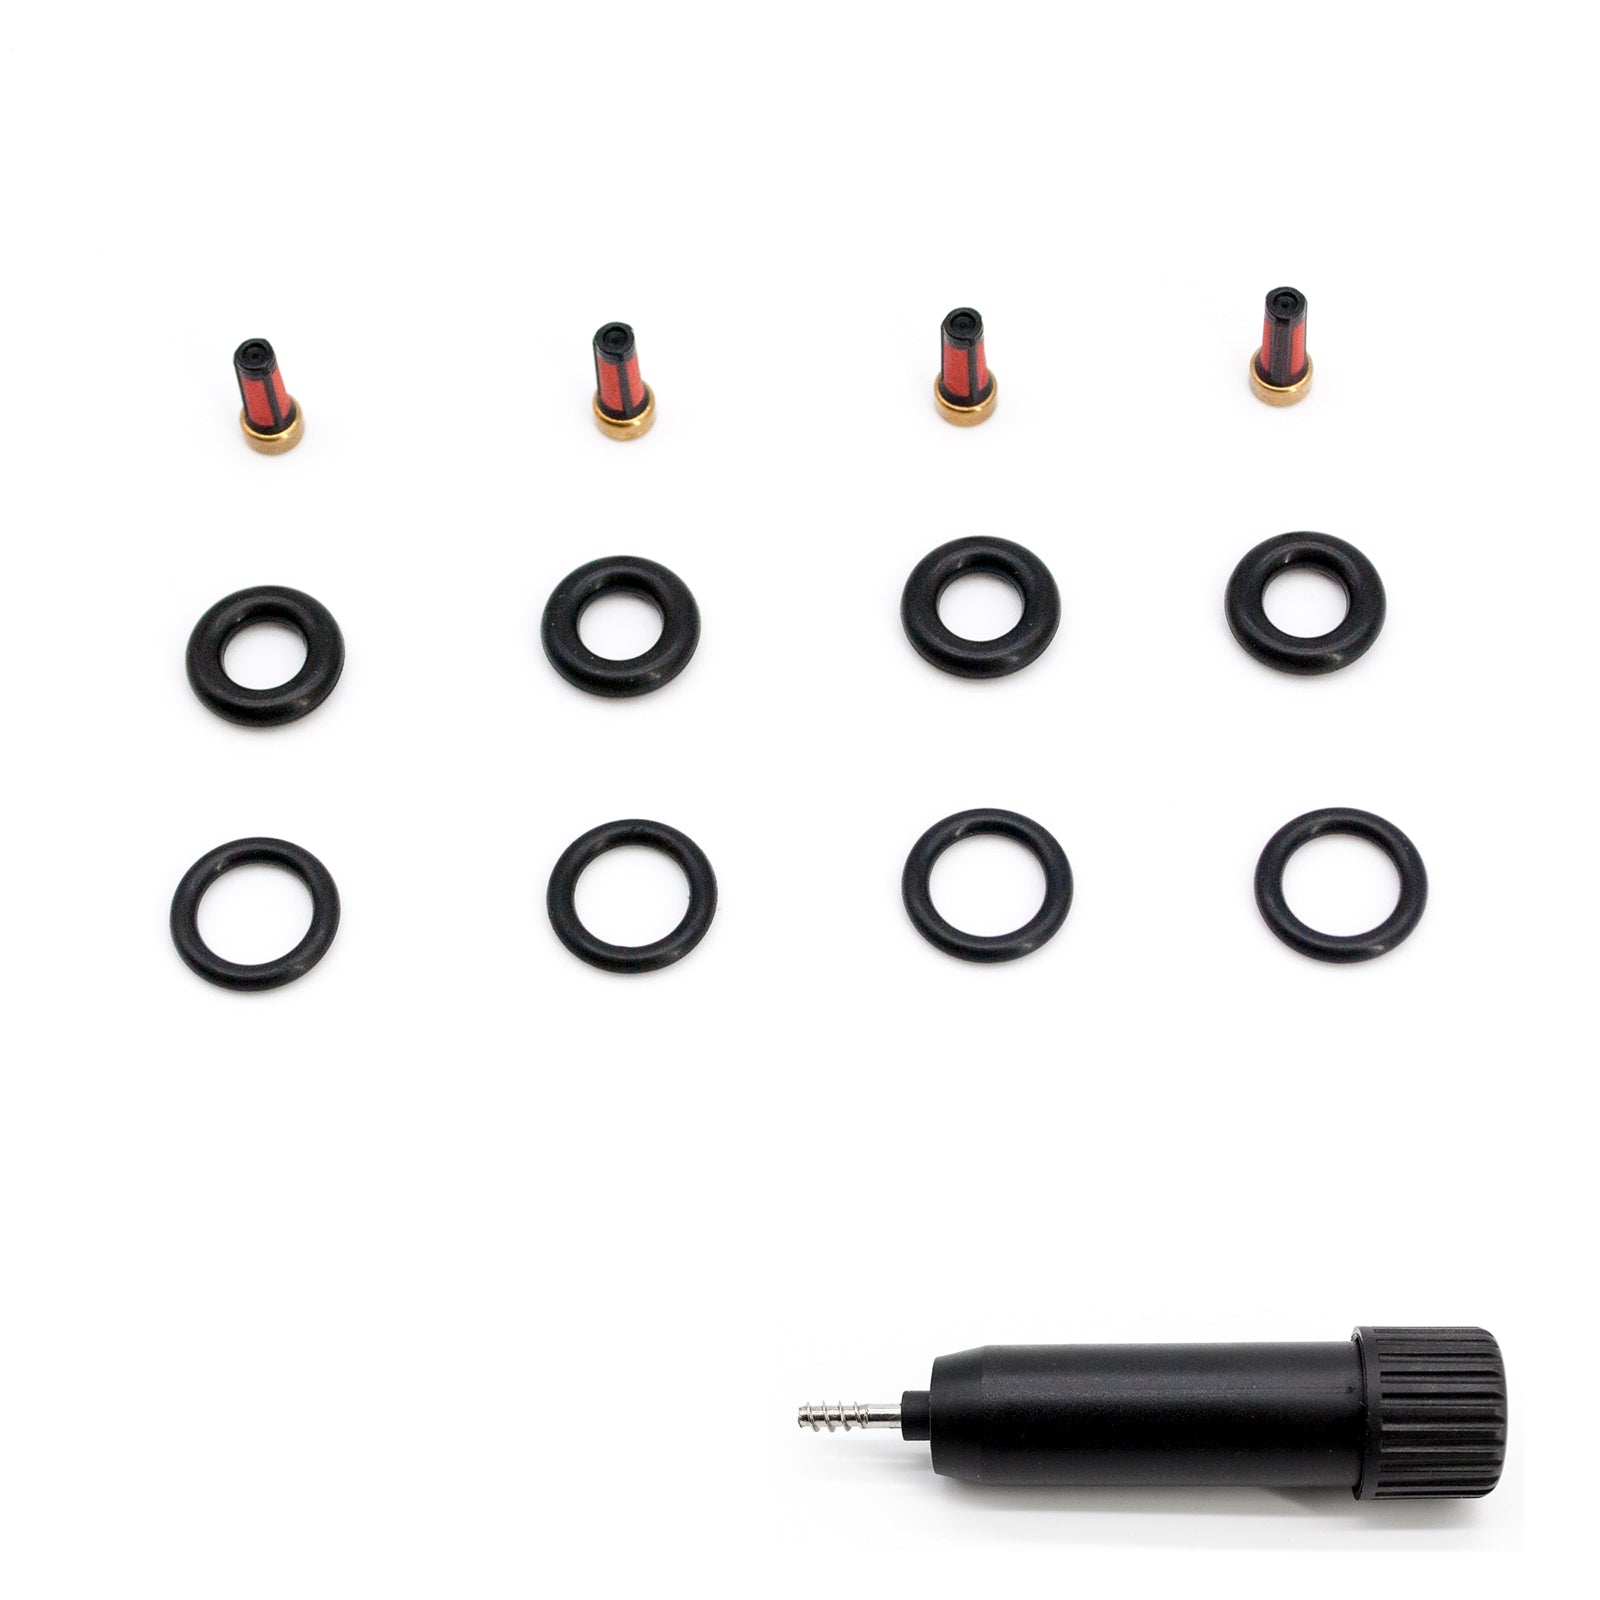 4 Set Fuel Injector Repair Seal Kit for Volkswagen Beetle Golf Jetta 2.0L 0280155995 RK-0115